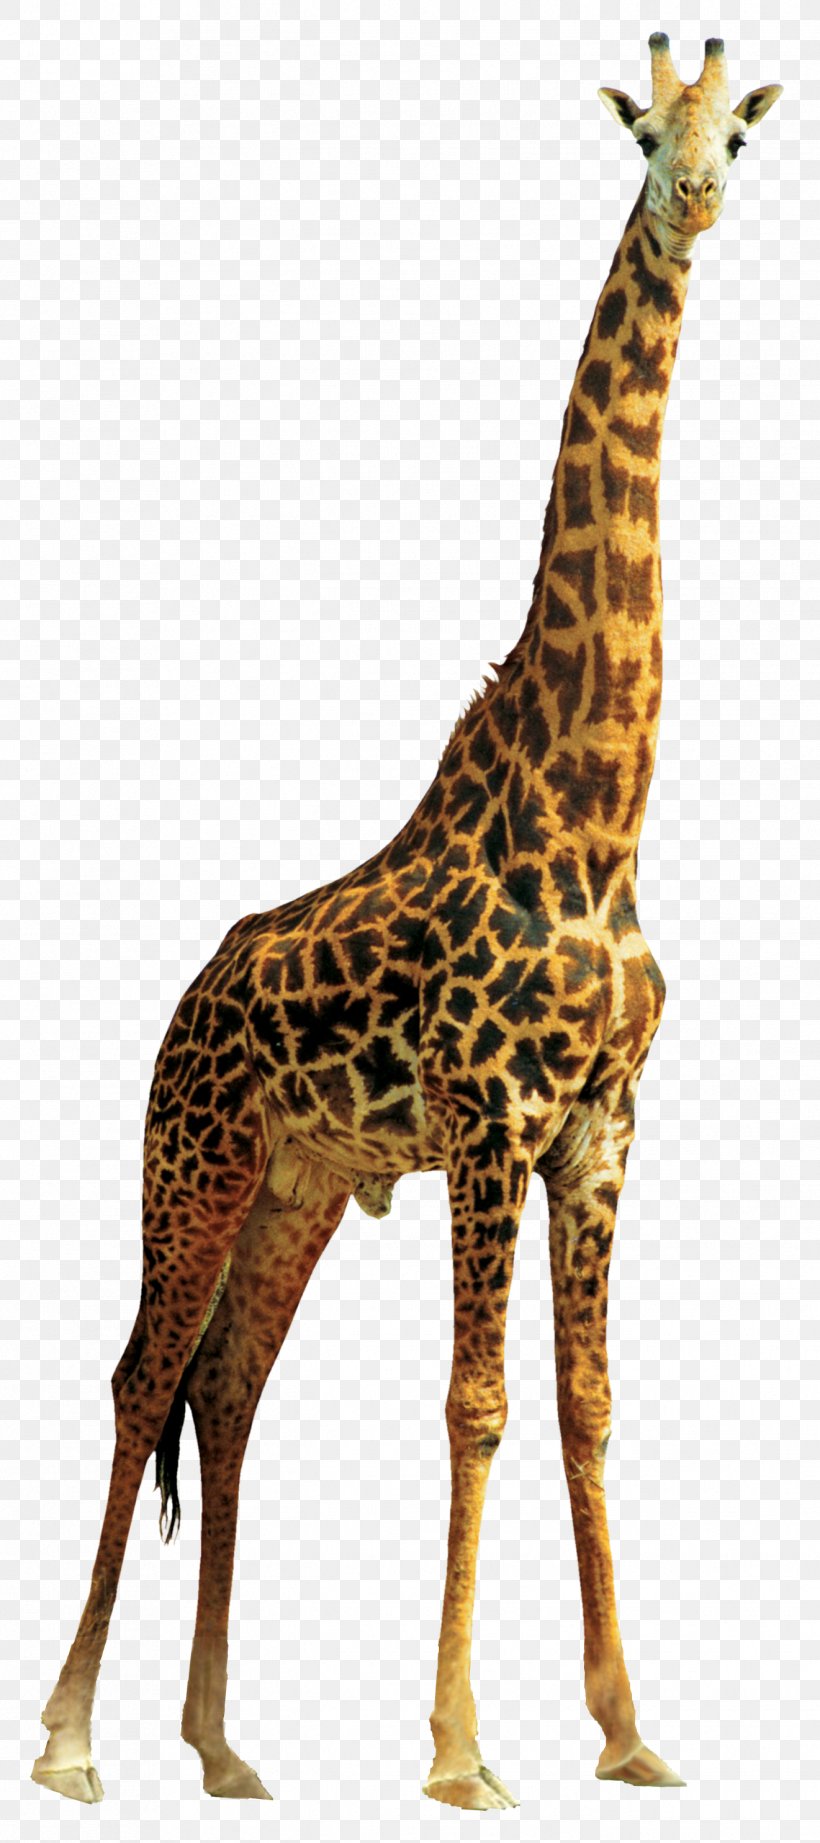 Northern Giraffe Transparency And Translucency Animal, PNG, 1321x2970px, Northern Giraffe, Animal, Animal Figure, Fauna, Giraffe Download Free